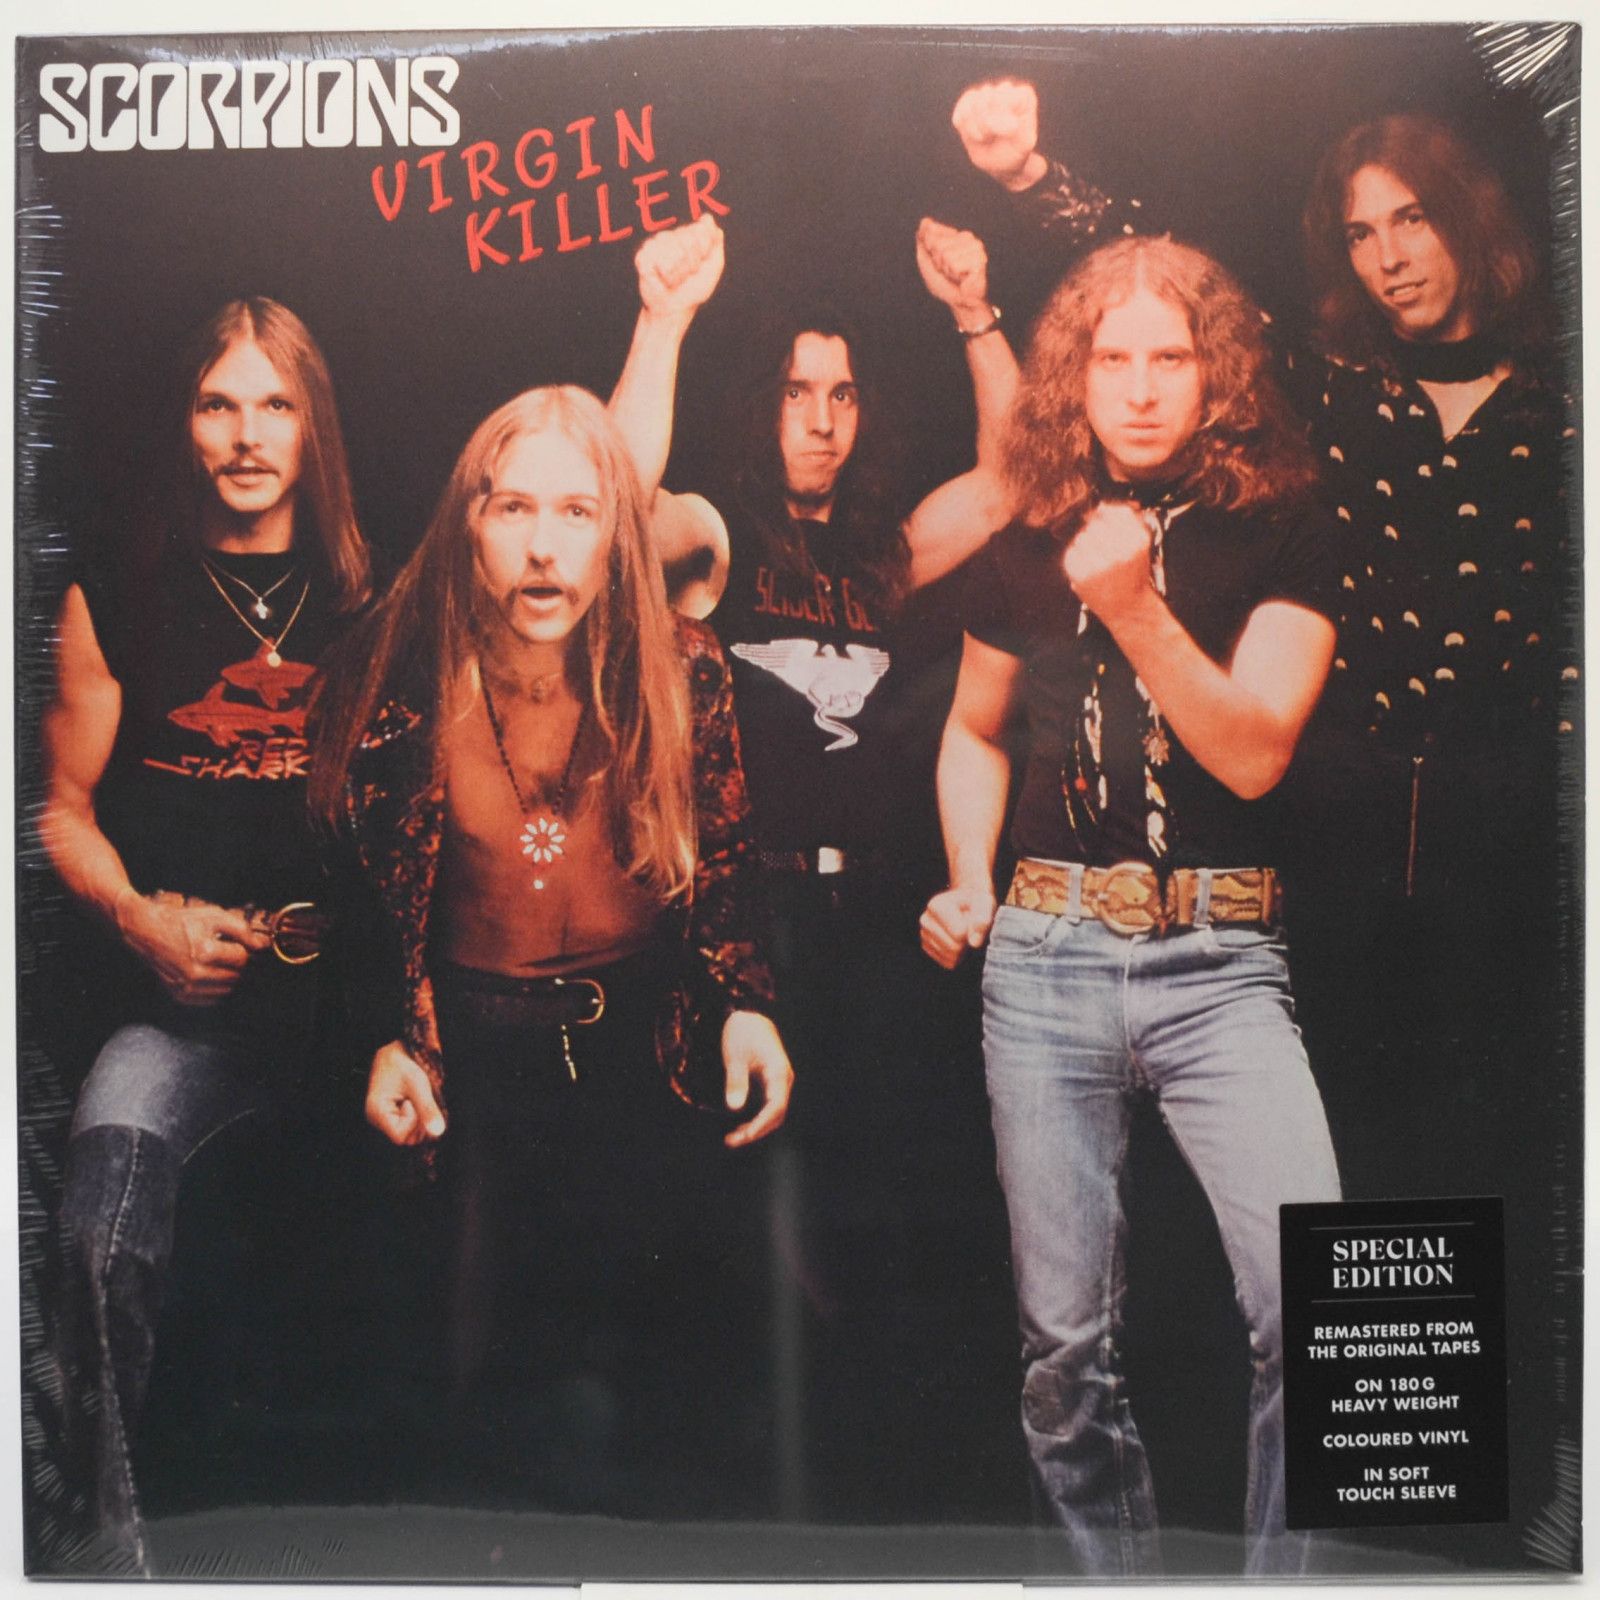 Scorpions — Virgin Killer, 1976